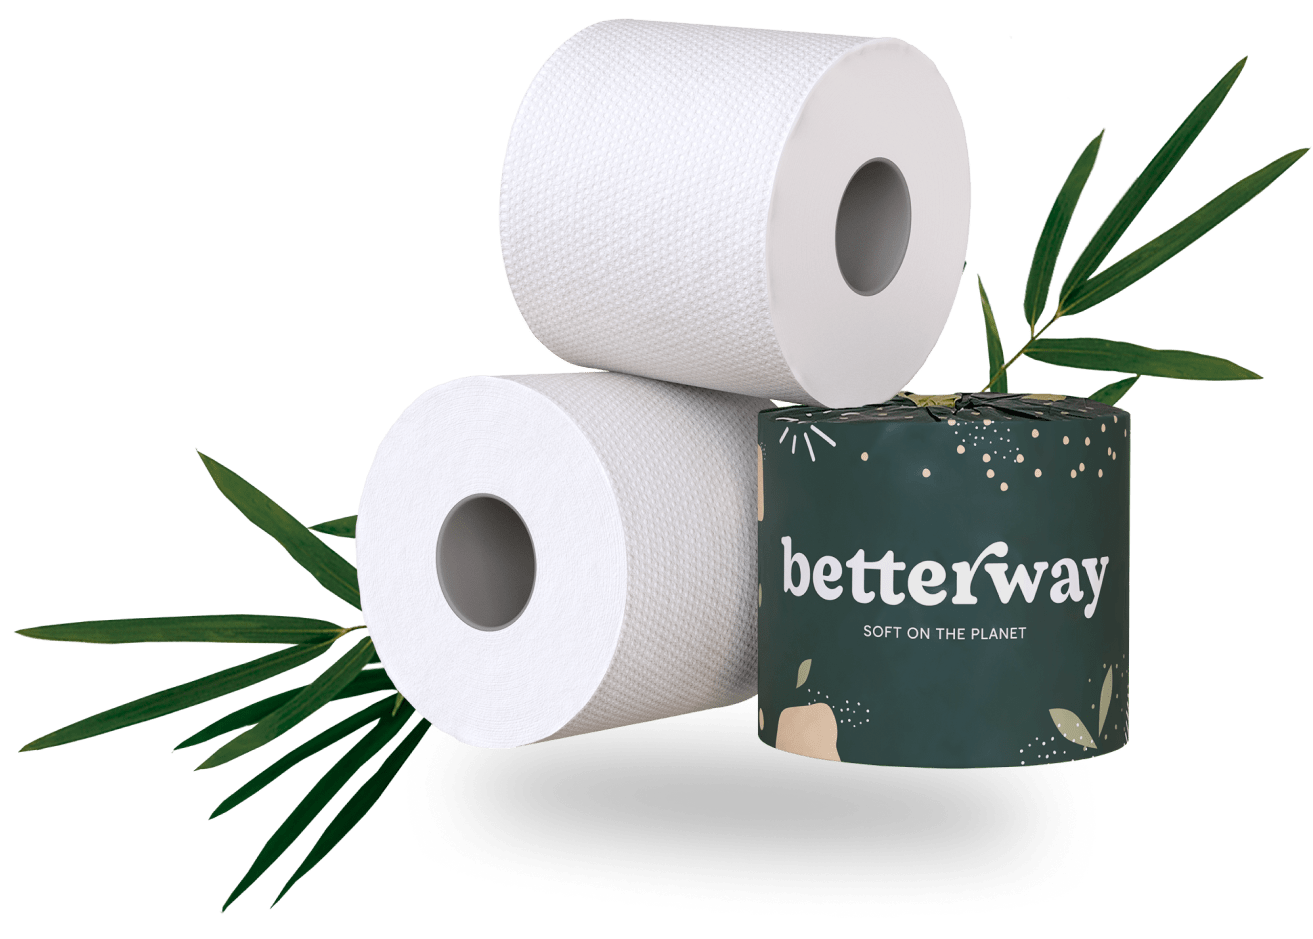 Toilete paper